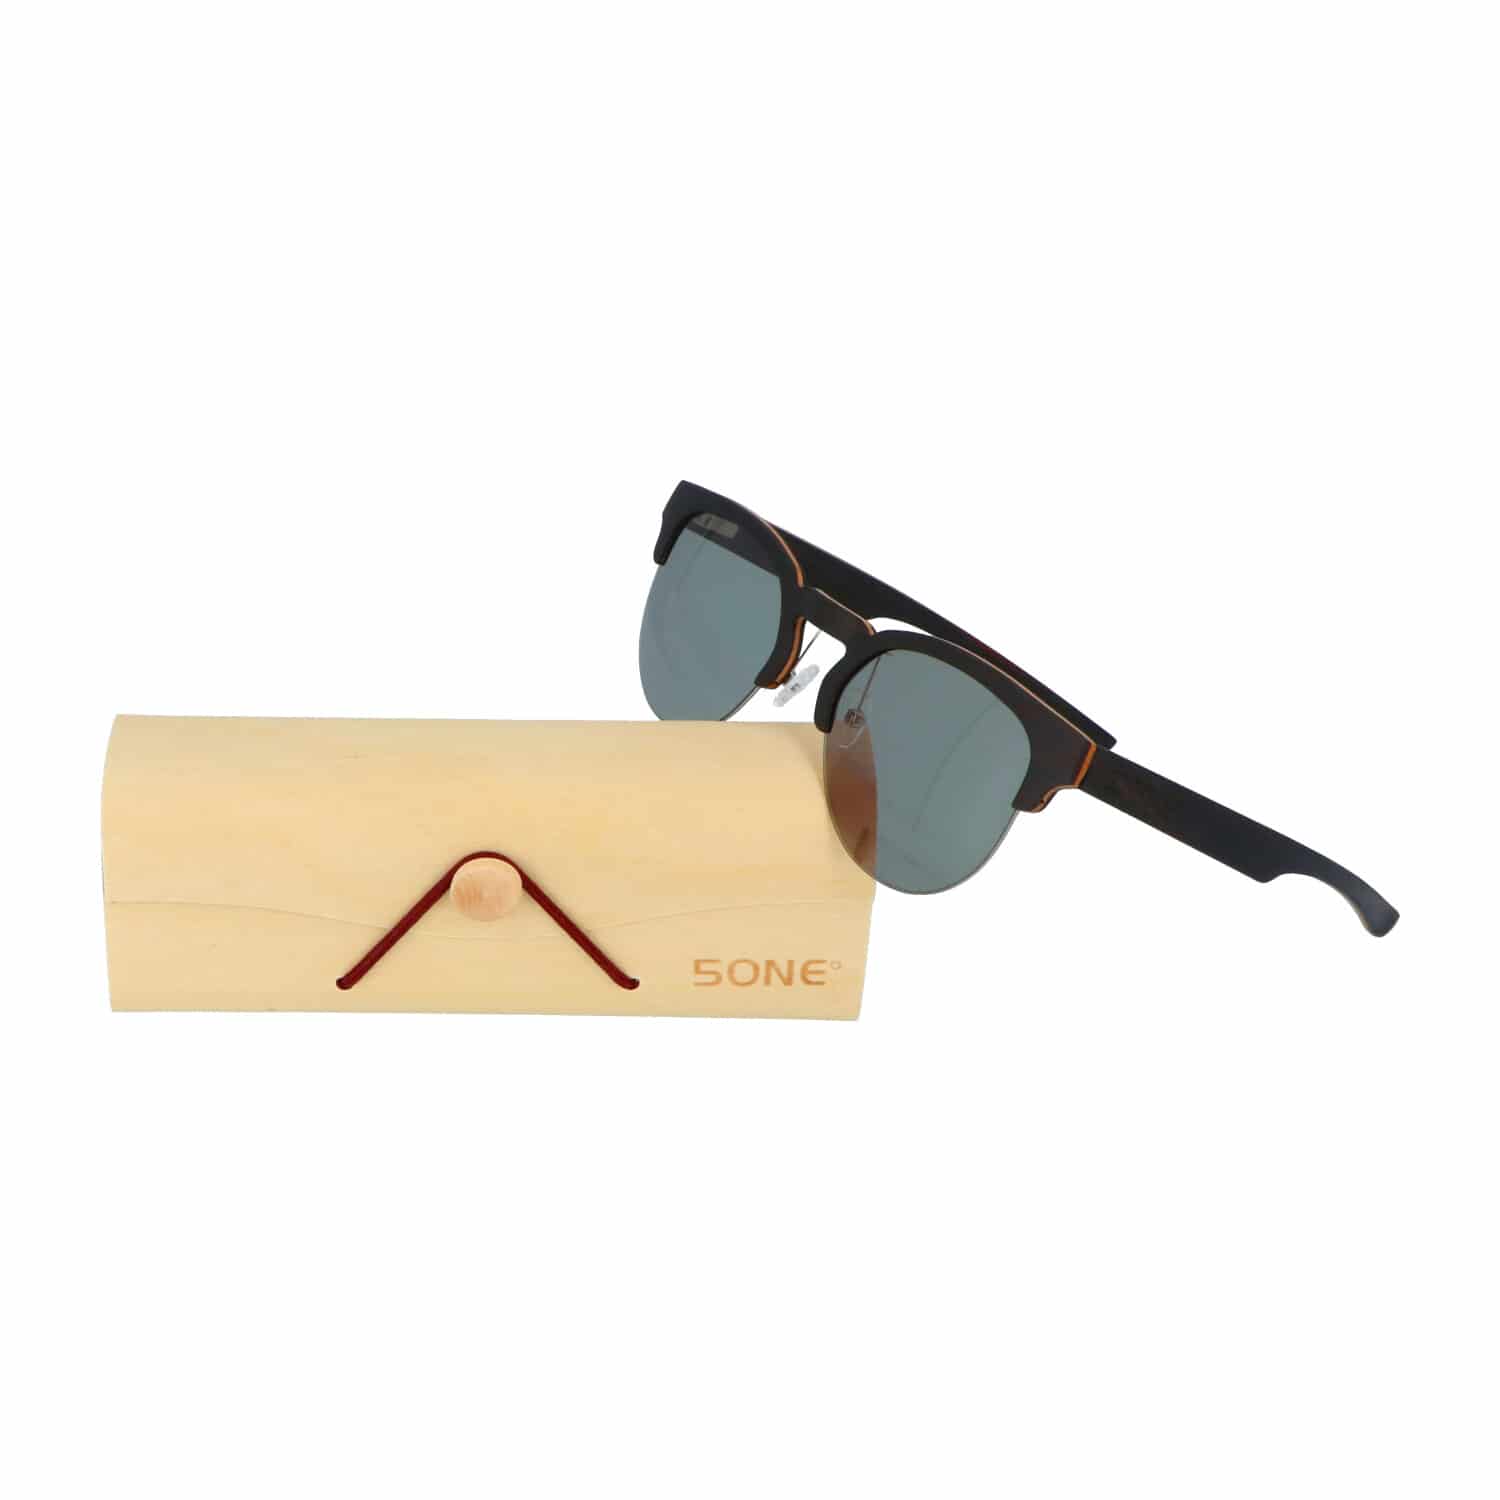 5one® Clubmaster Sports G15 - Ebony houten zonnebril - sportief model